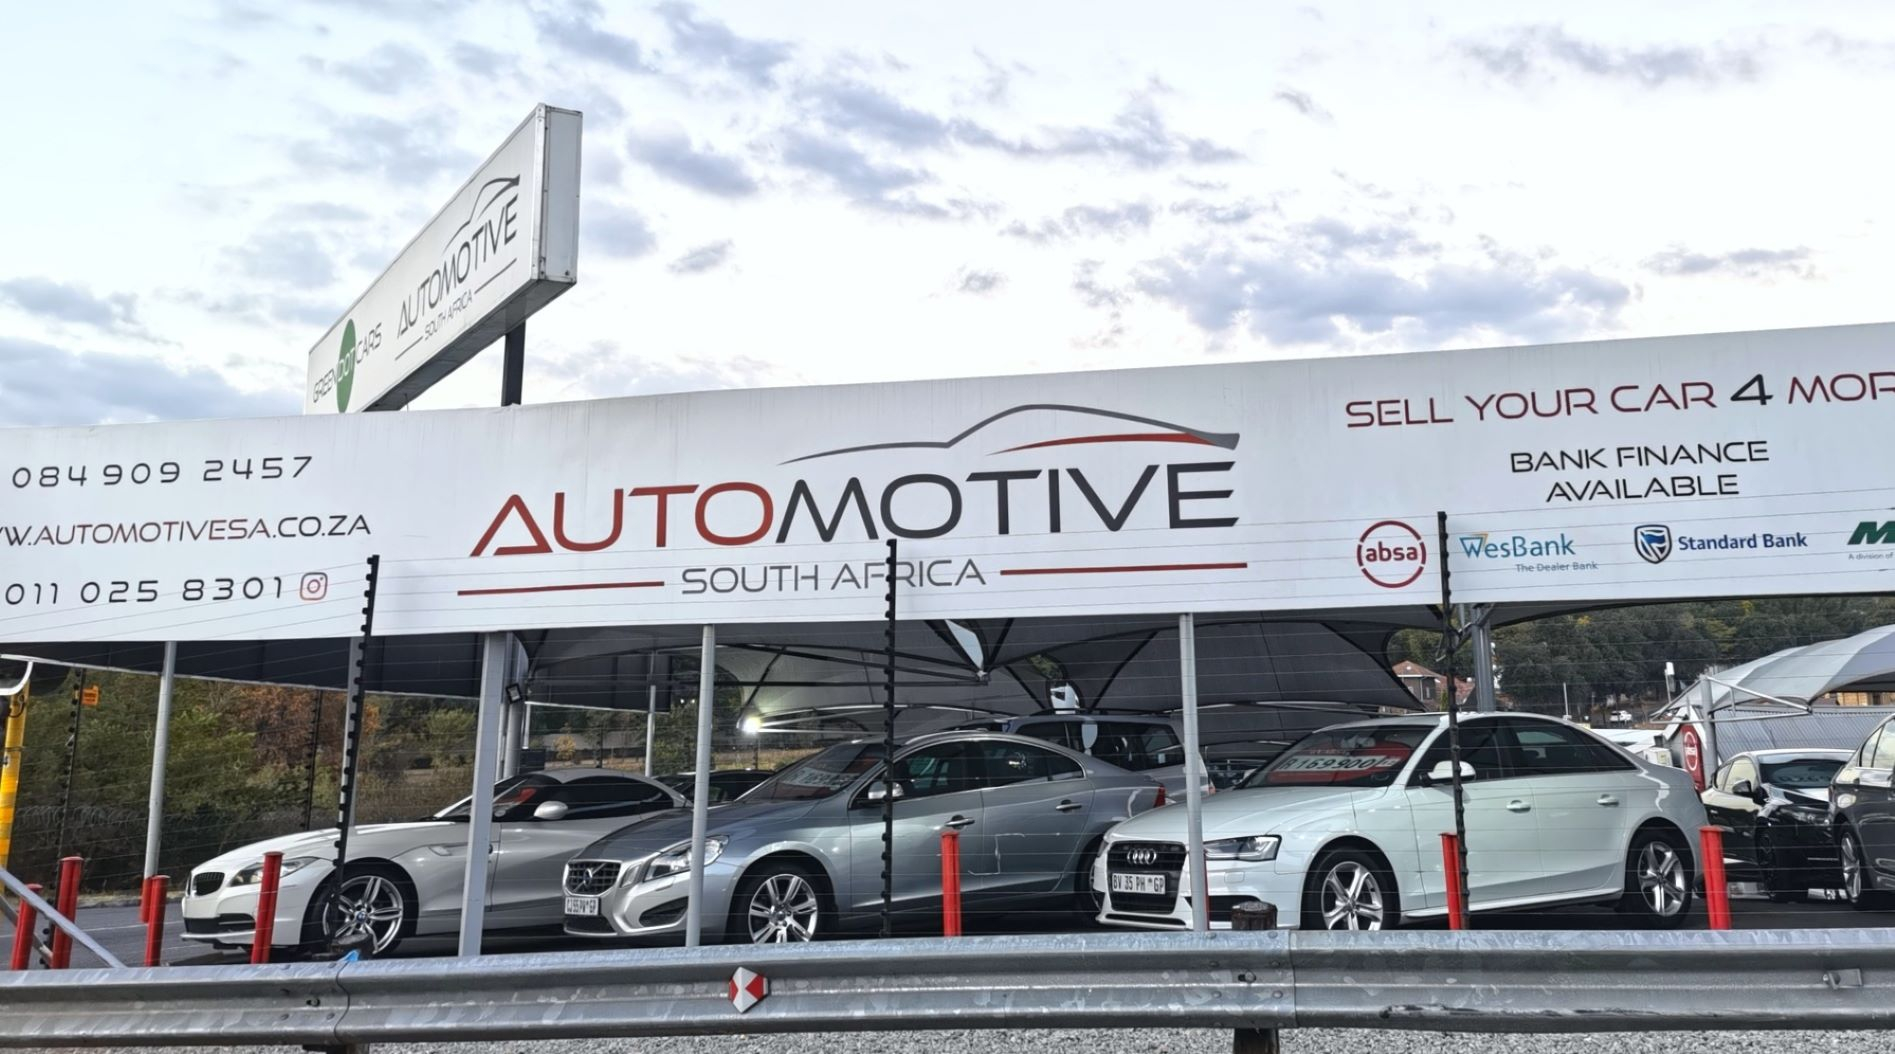 Automotive South Africa